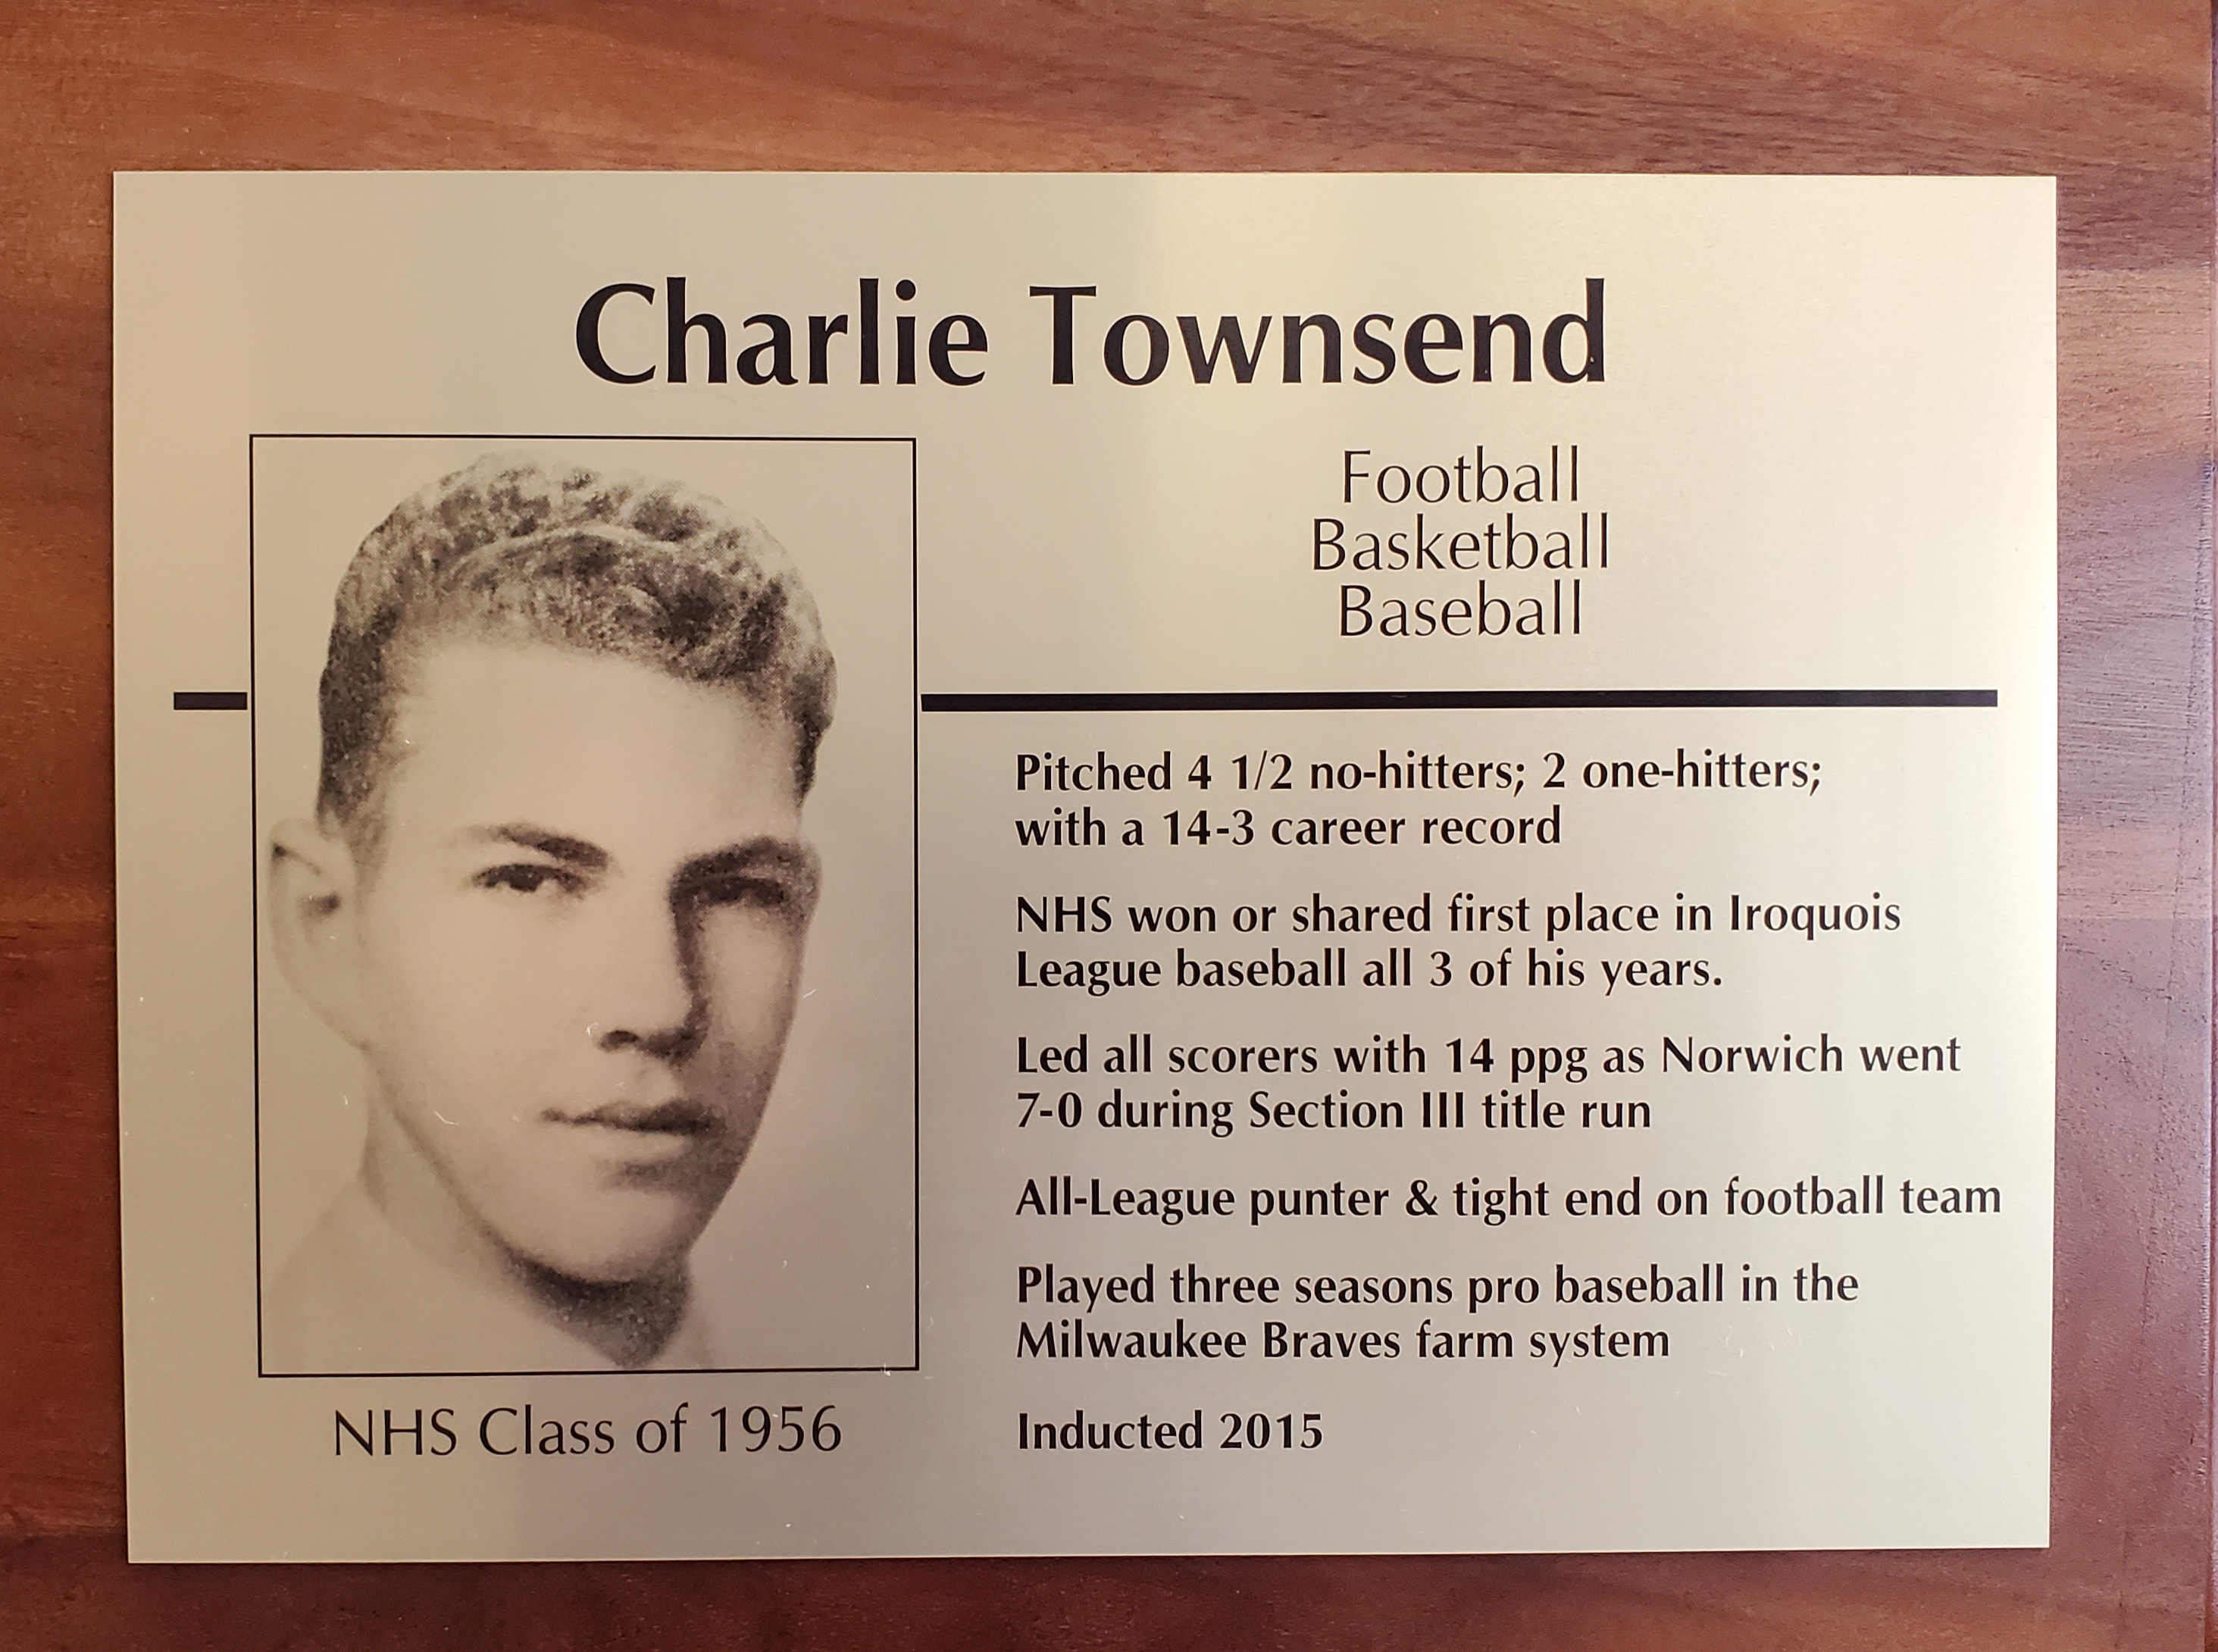 Charlie Townsend